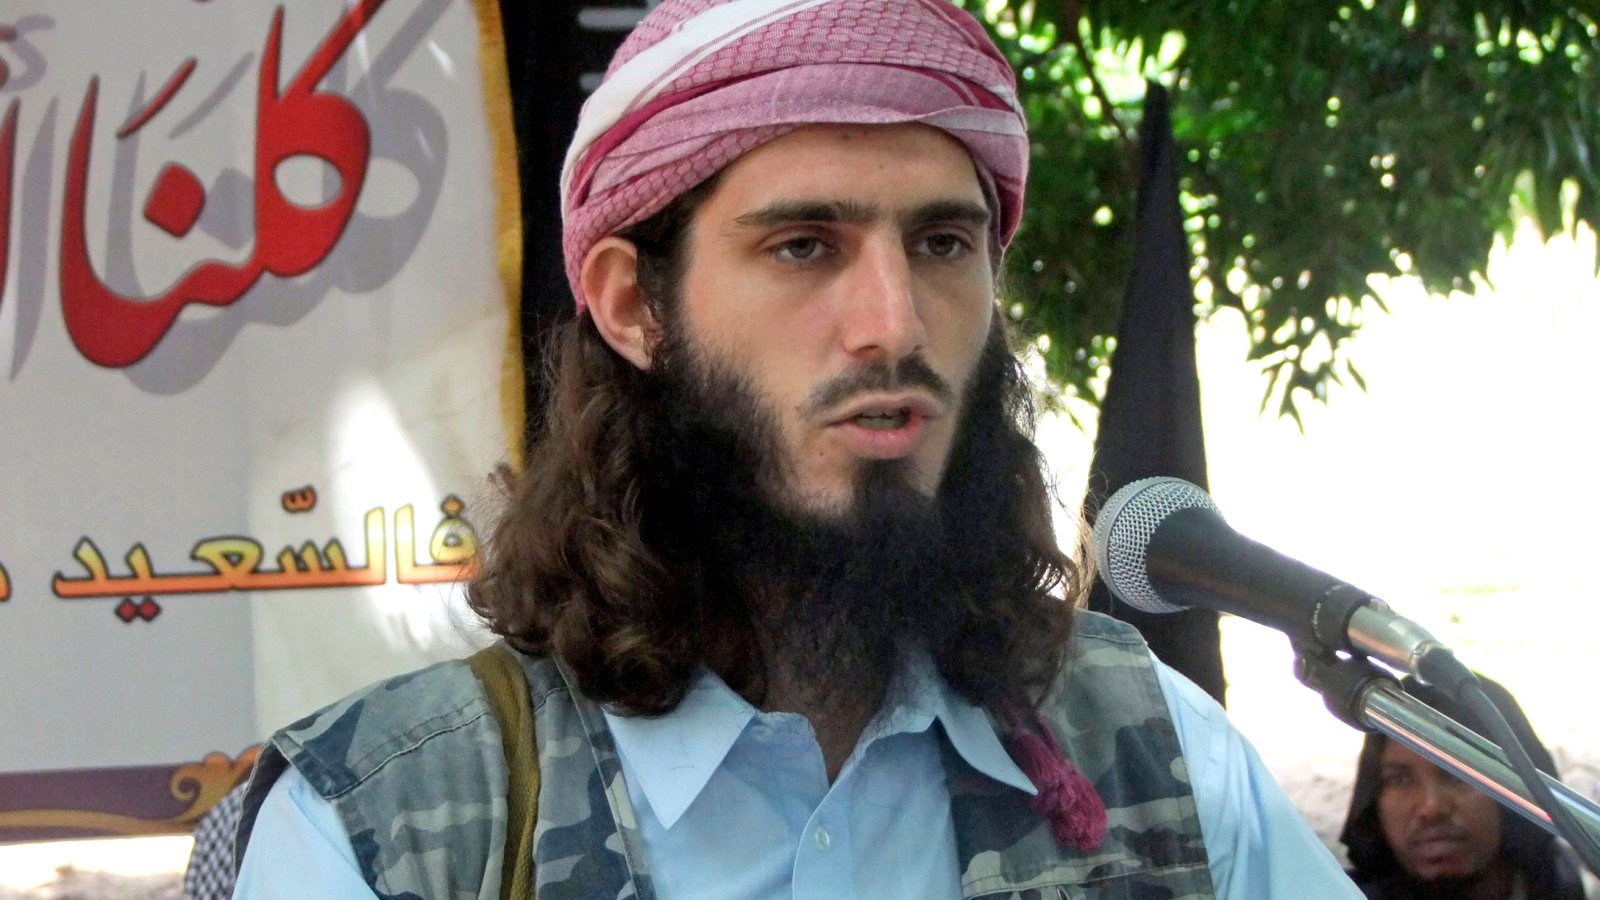 American Jihadi’: New Podcast Details Secret Relationship Between Journalist And Killer